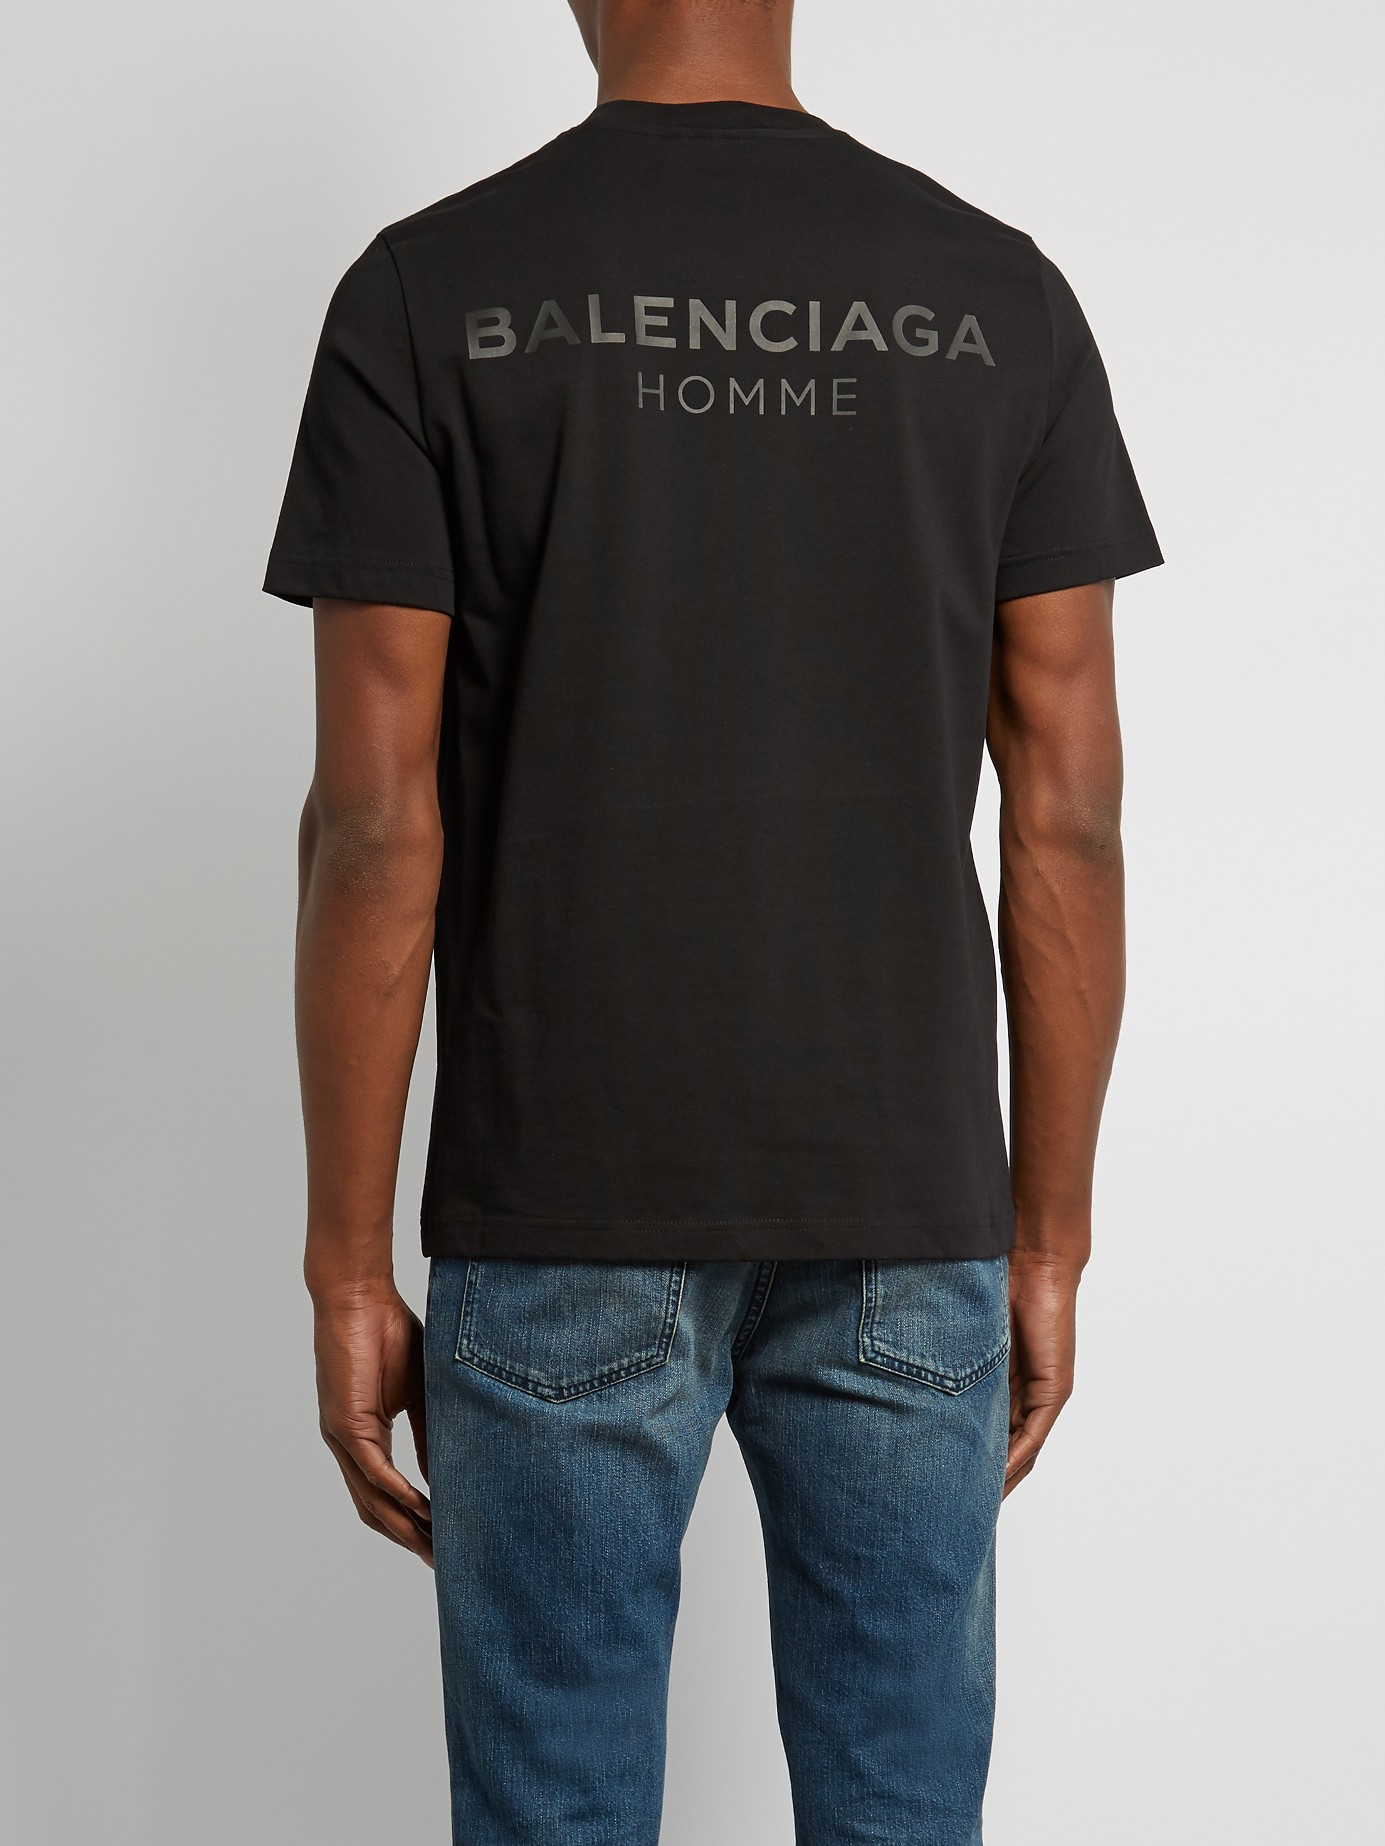 Lyst - Balenciaga Logo-print Cotton T-shirt in Black for Men